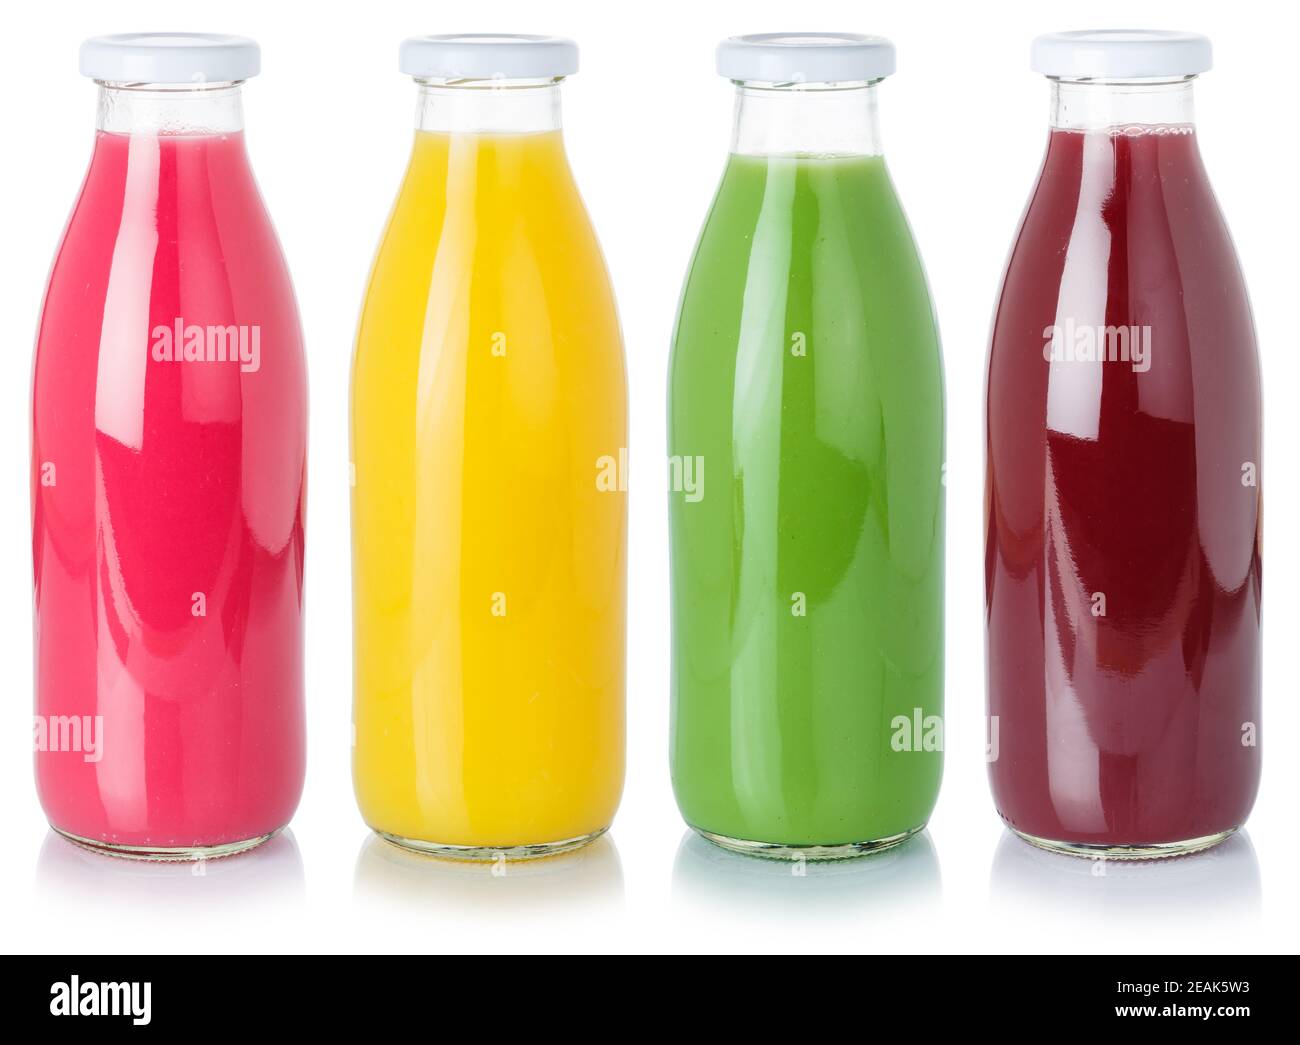 https://c8.alamy.com/comp/2EAK5W3/fresh-fruit-juice-drink-drinks-in-a-bottle-healthy-eating-isolated-on-white-2EAK5W3.jpg